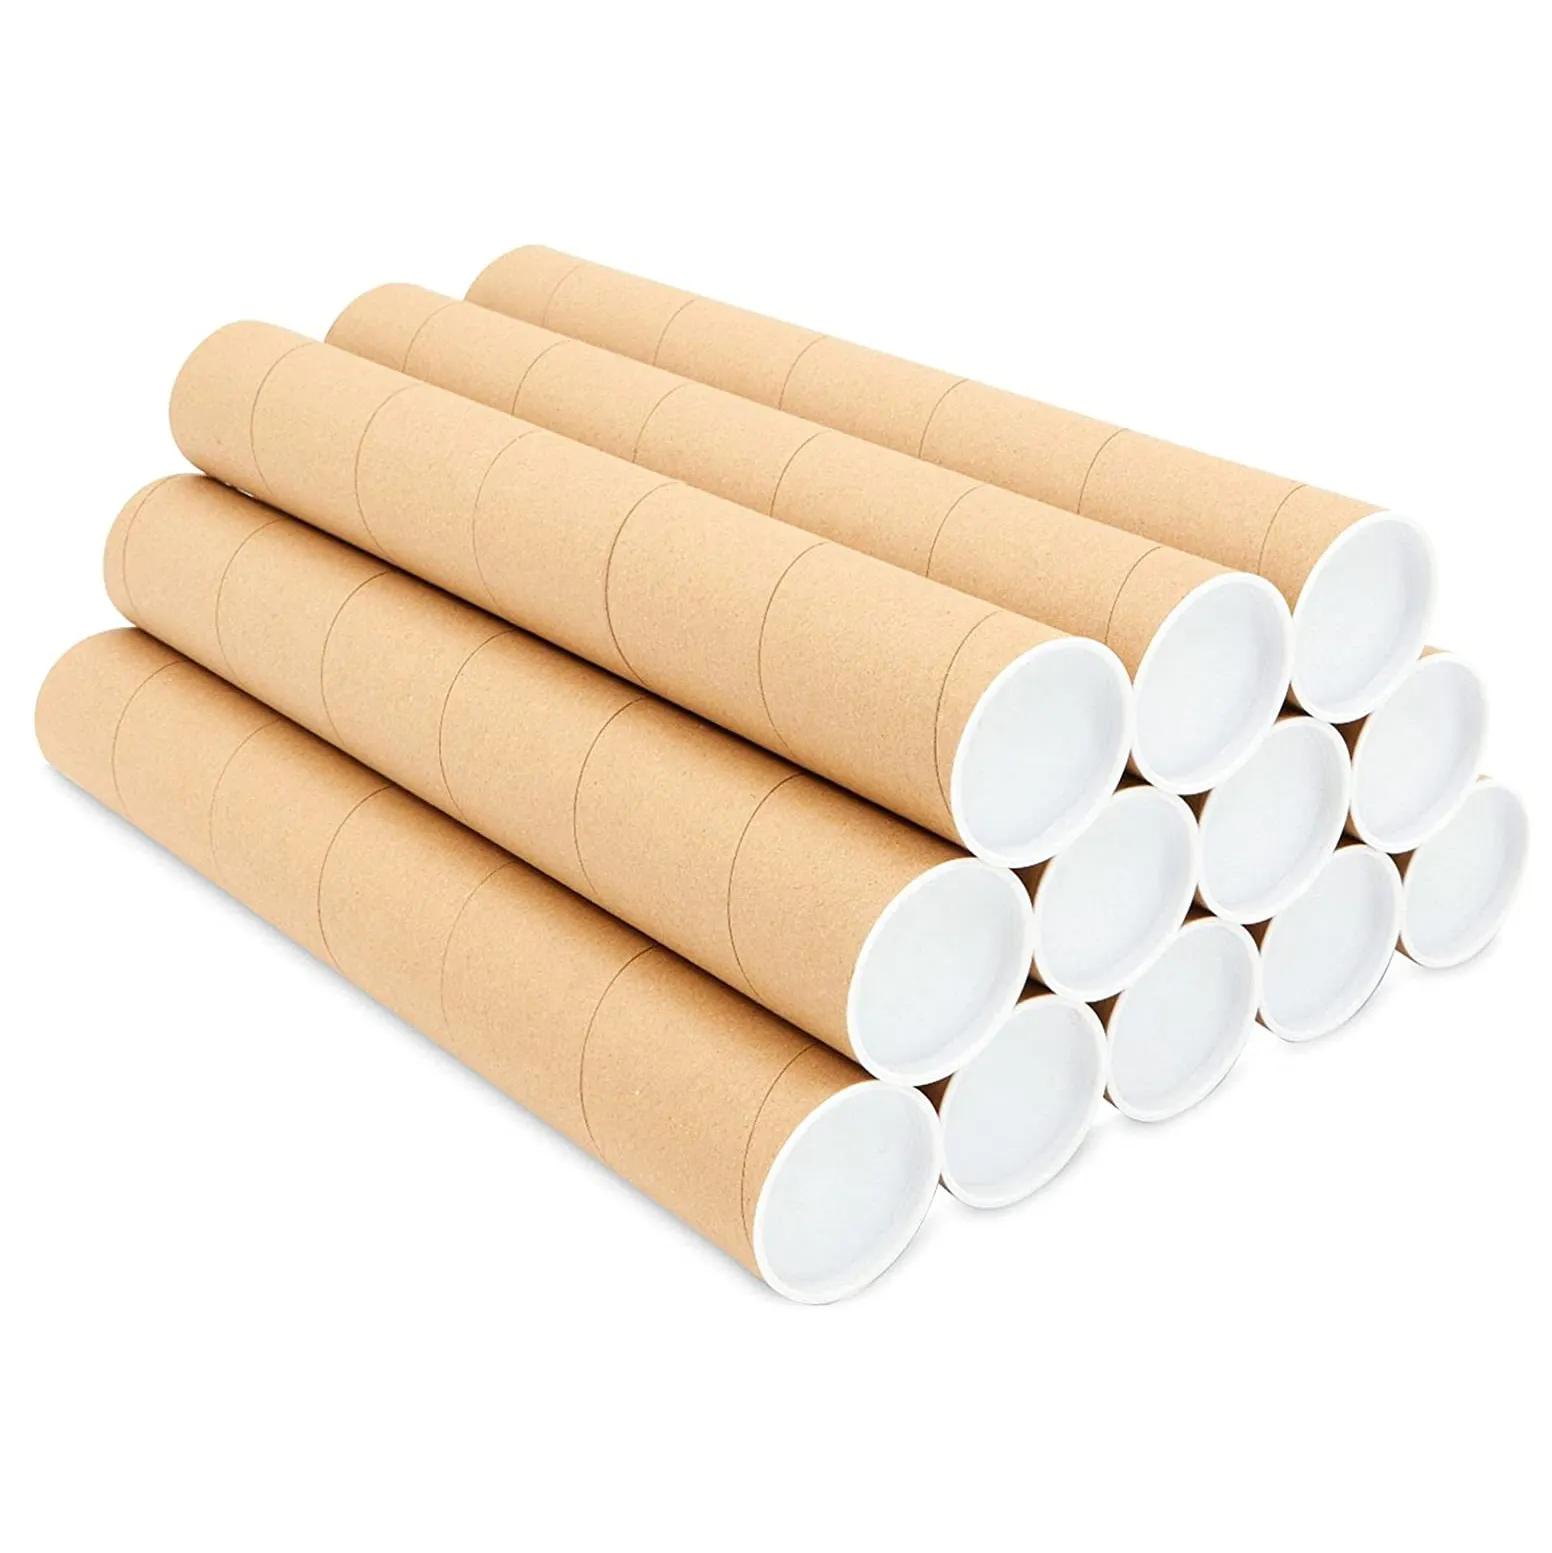 cardboard shipping tube/mailing/poster packaging tube round box brown paper kraft tube metal lid/plastic lid